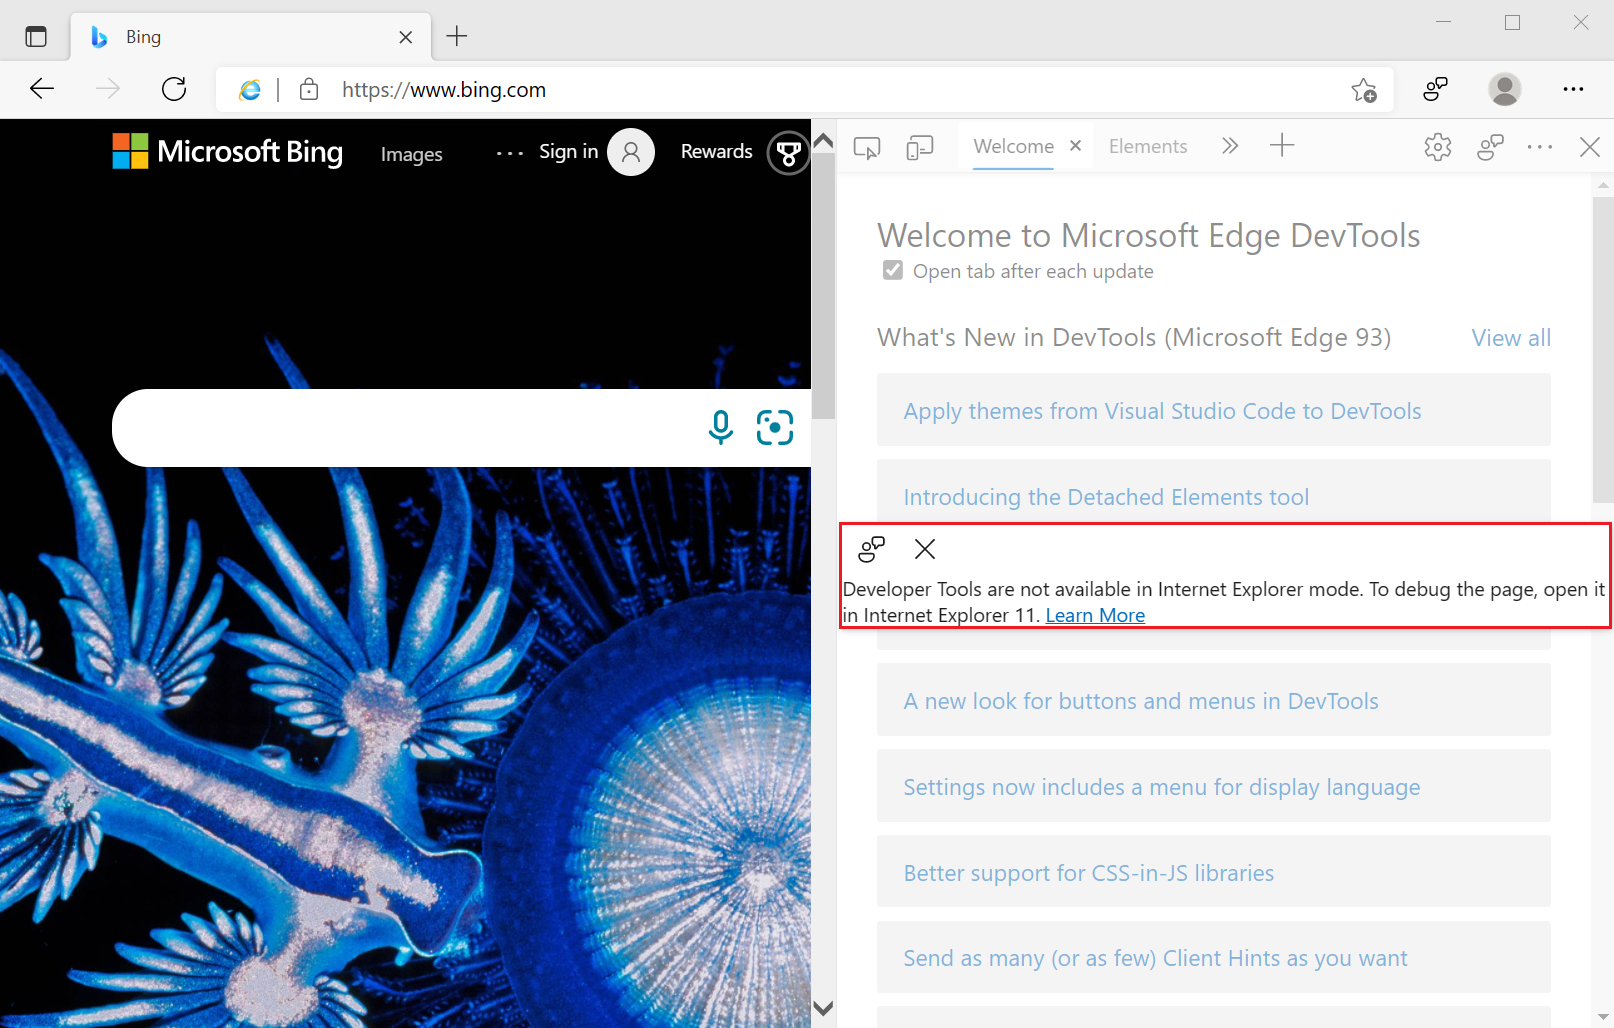 Use DevTools in Internet Explorer mode - Microsoft Edge